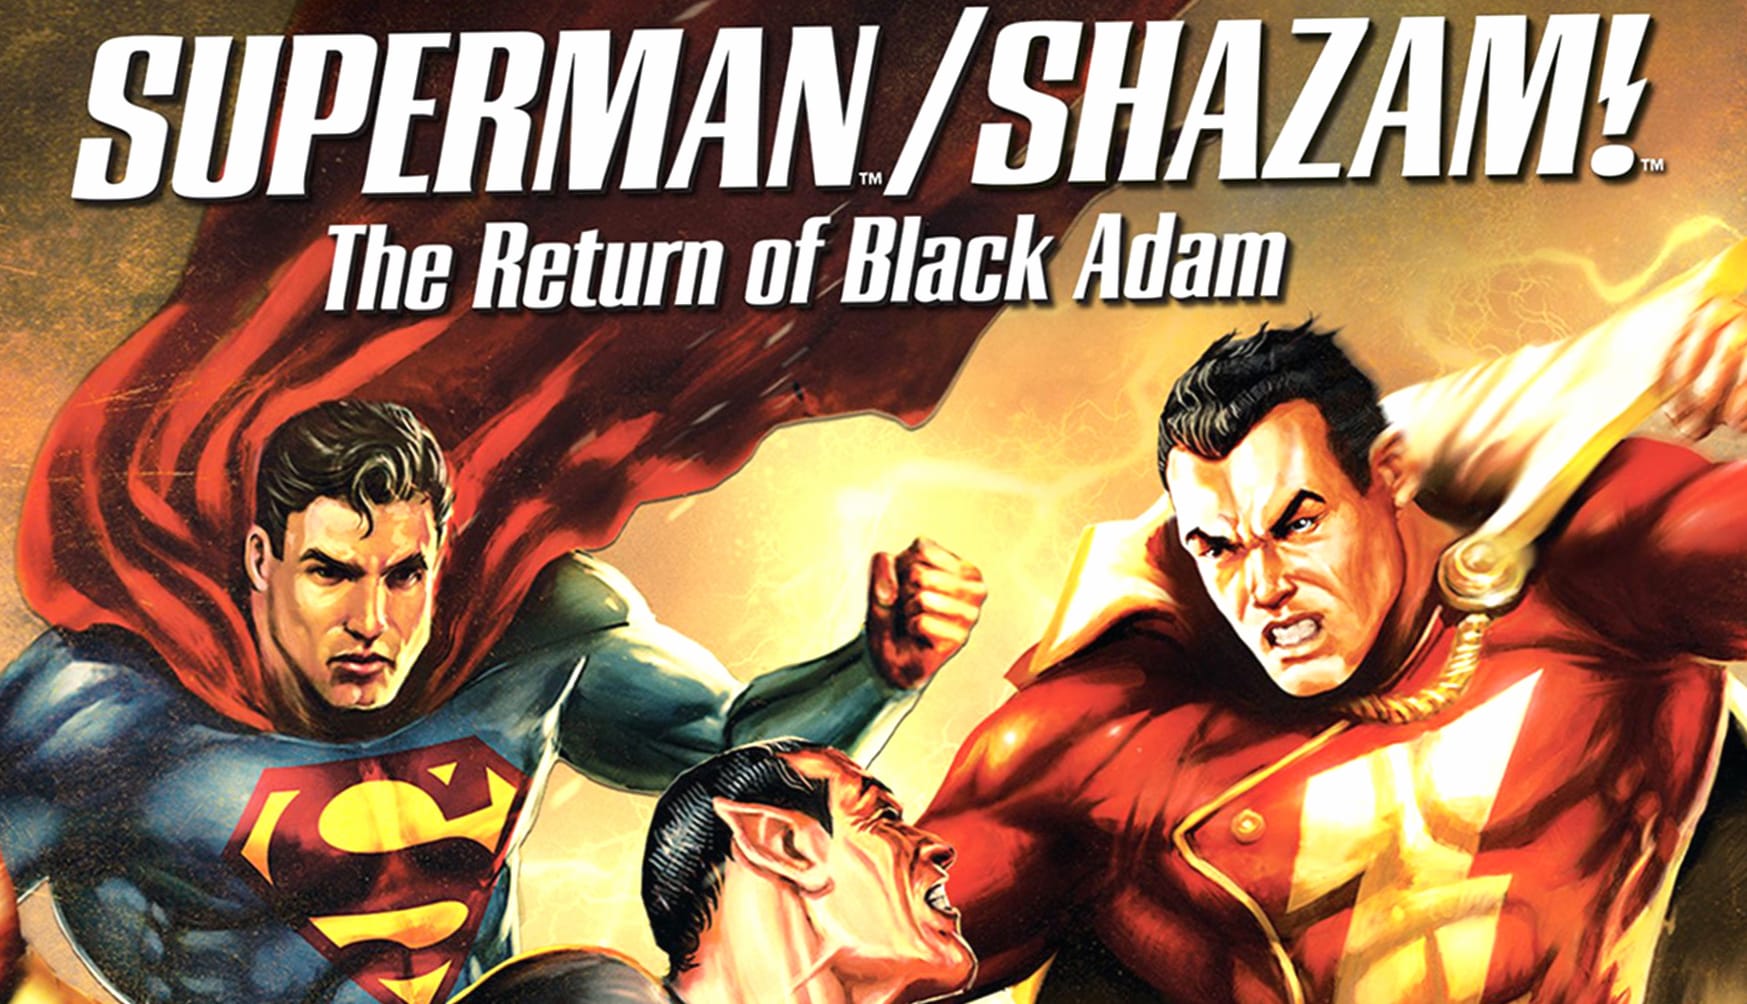 Superman Shazam! The Return of Black Adam wallpapers HD quality